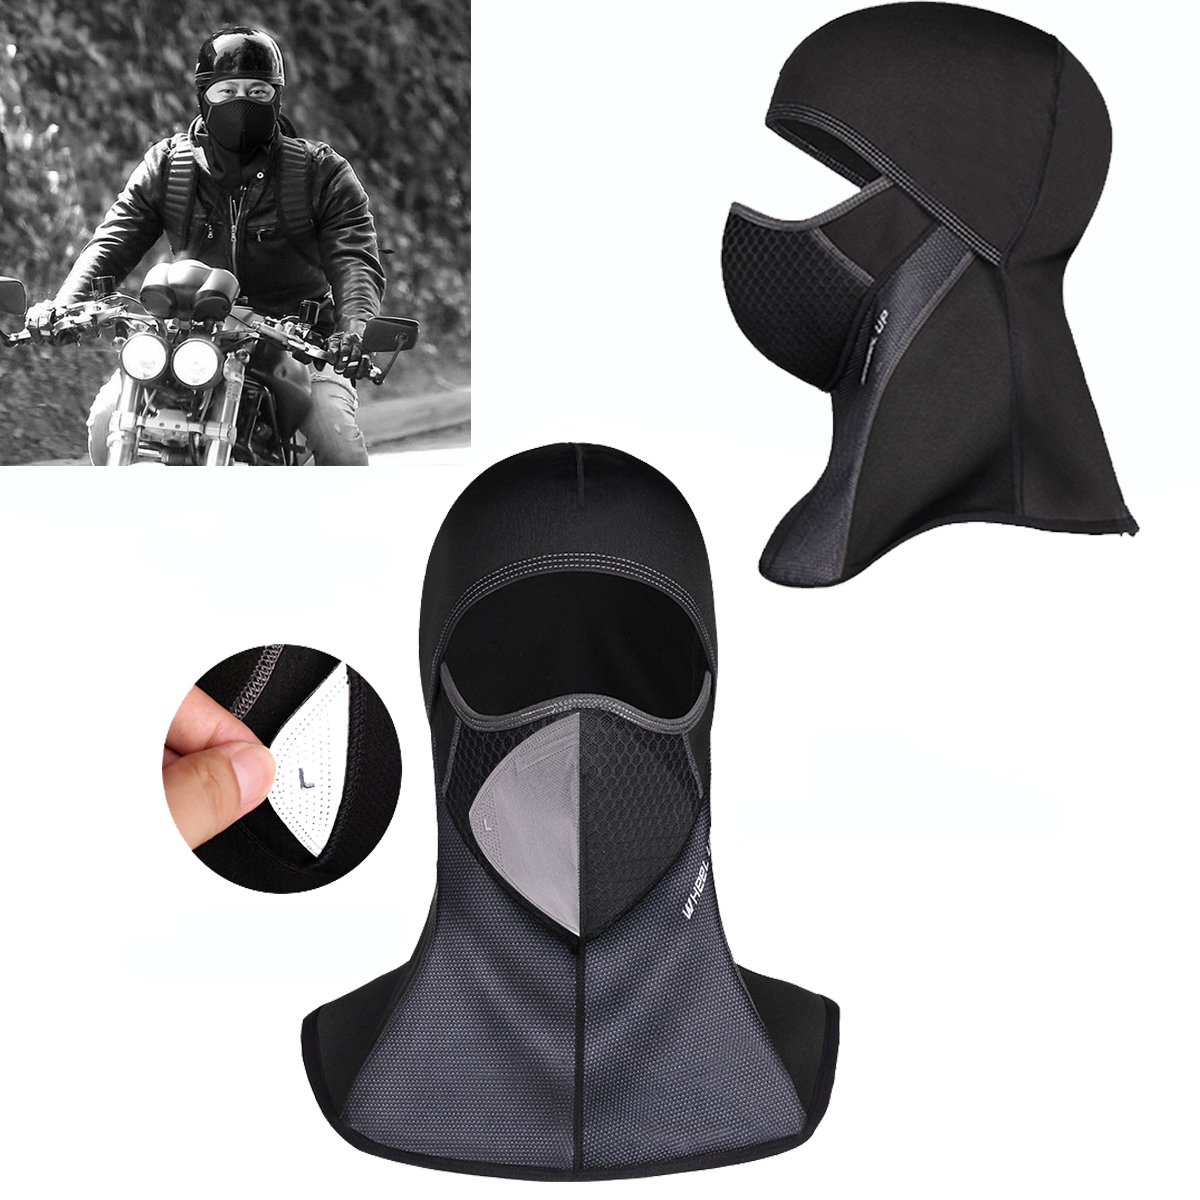 

Wheel up Winter Warm Ski Motorcycly Cycling Face Mask Helmet Cap Windproof Fleece Balaclava Hat